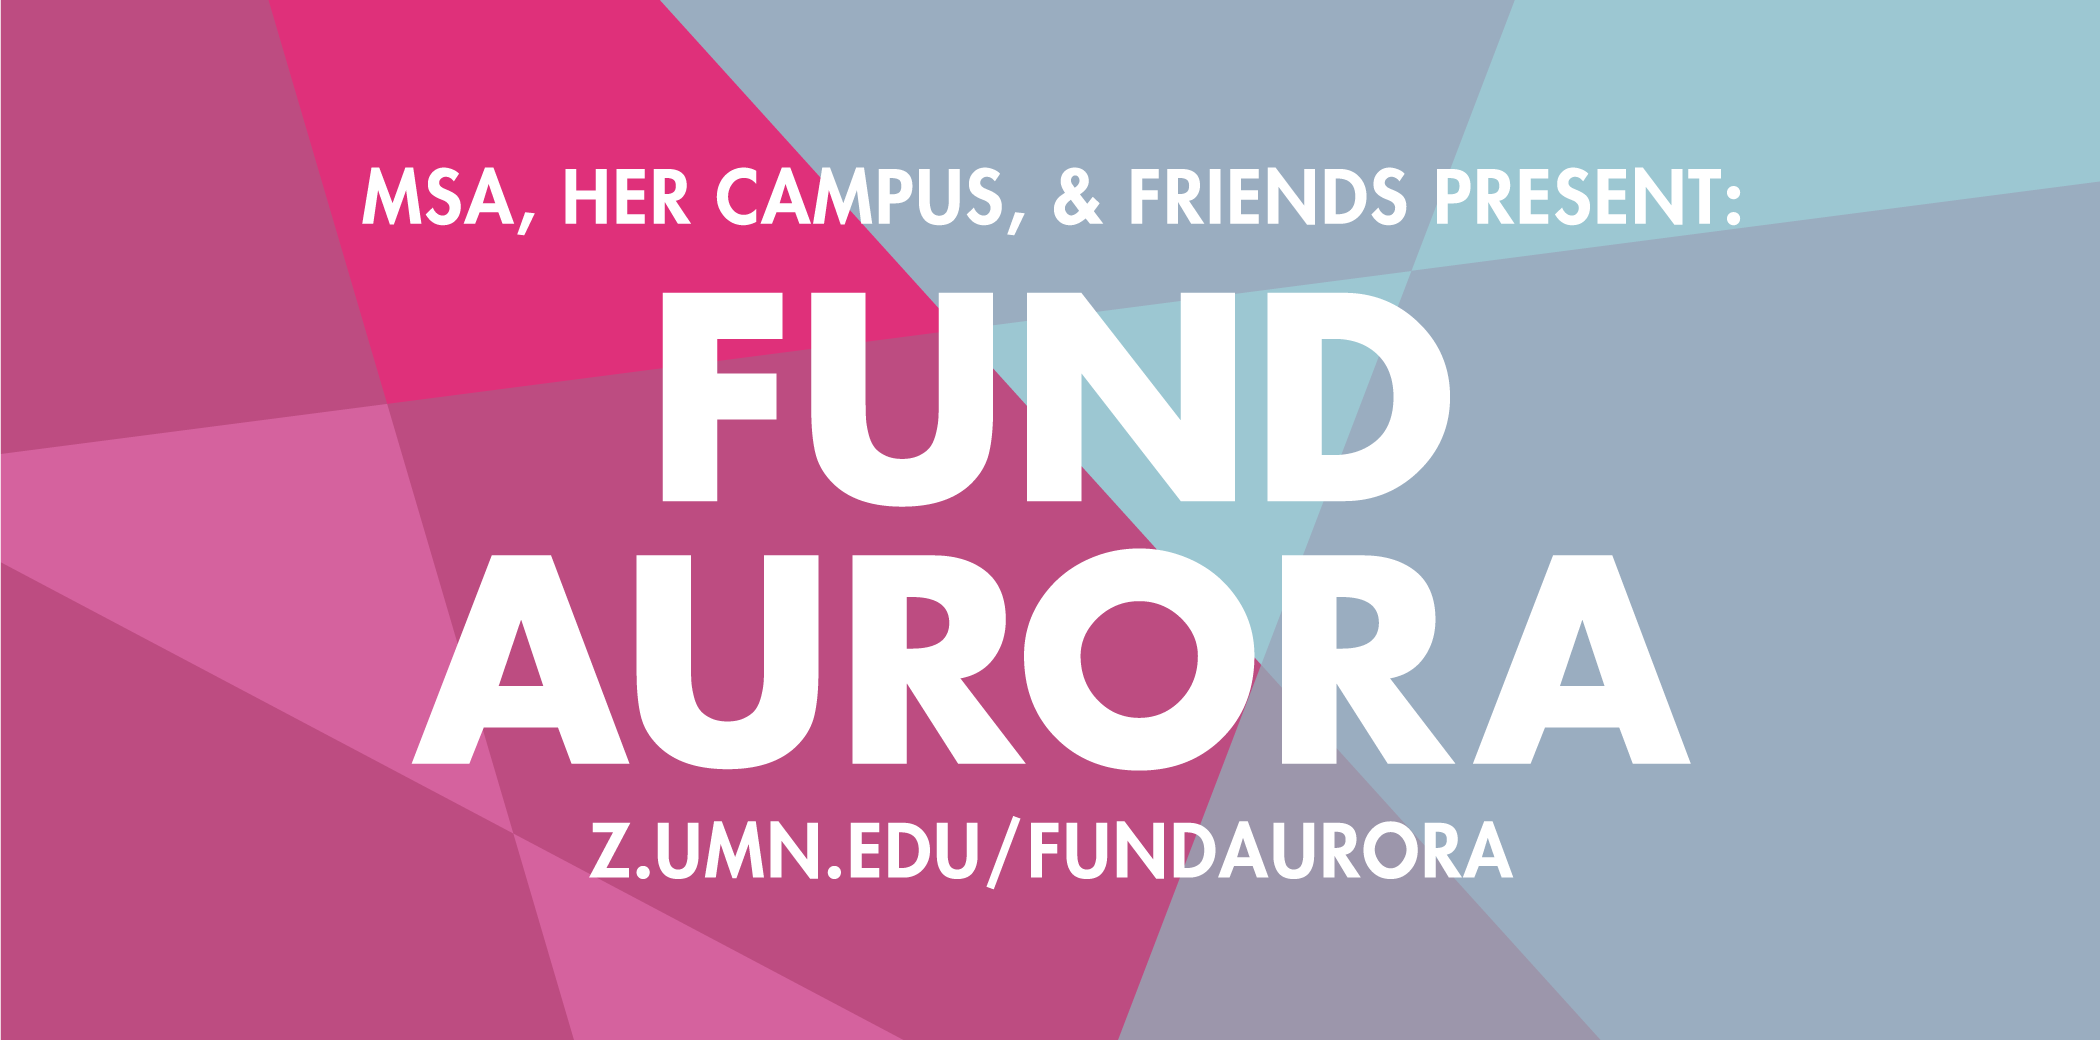 UMN Fund Aurora Campaign